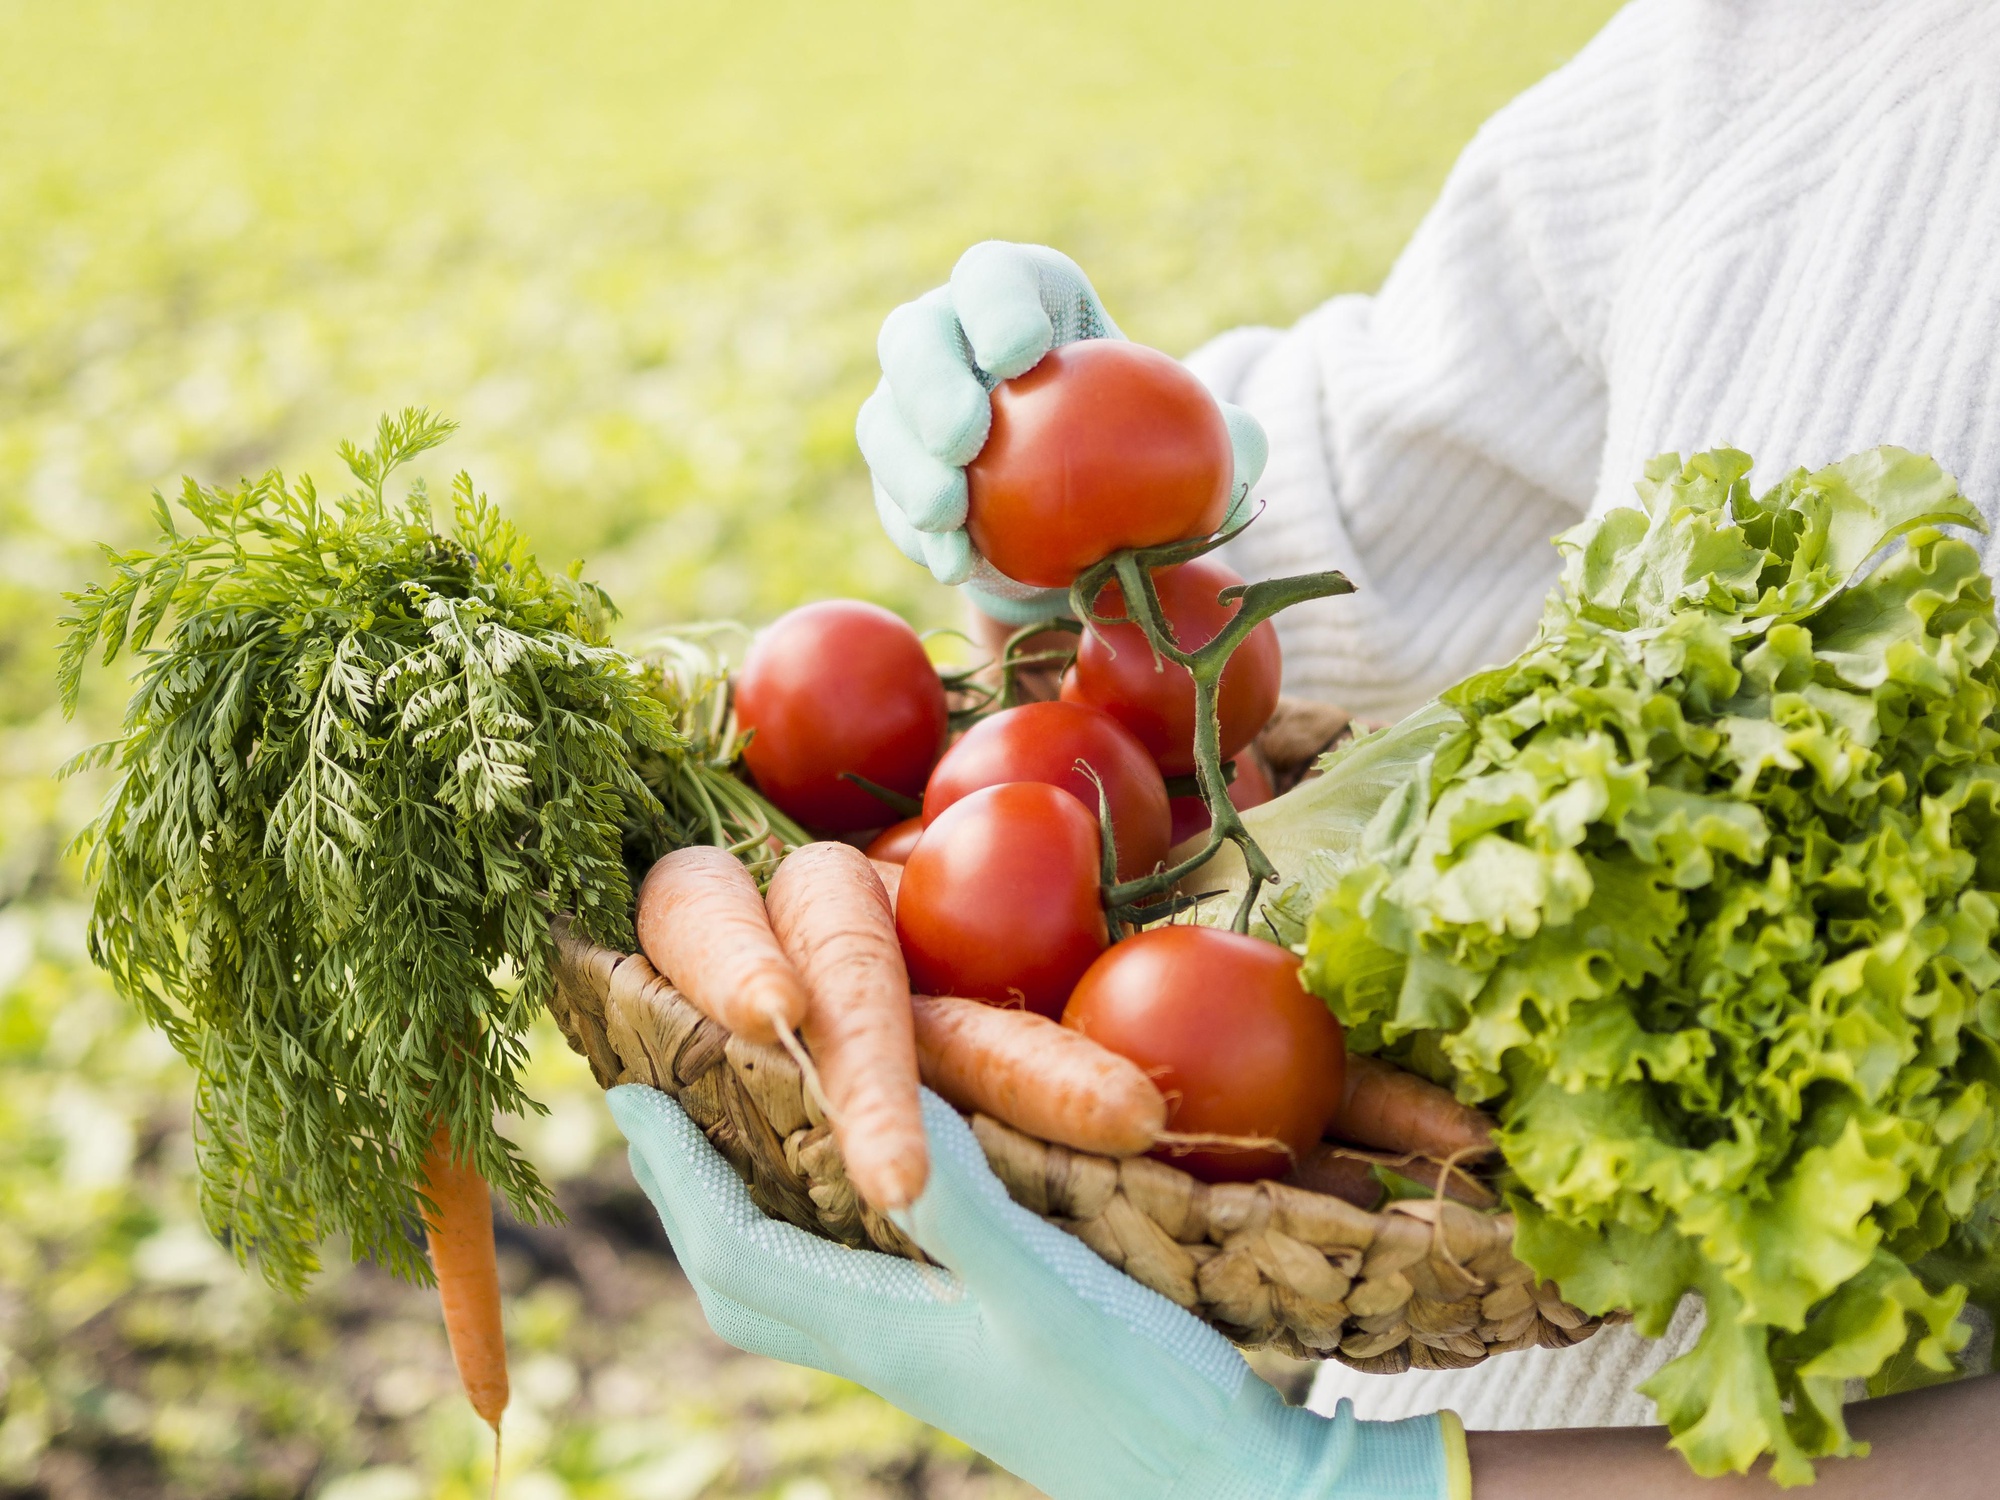 You Should Plant Quick-Harvesting Vegetables In Your Garden